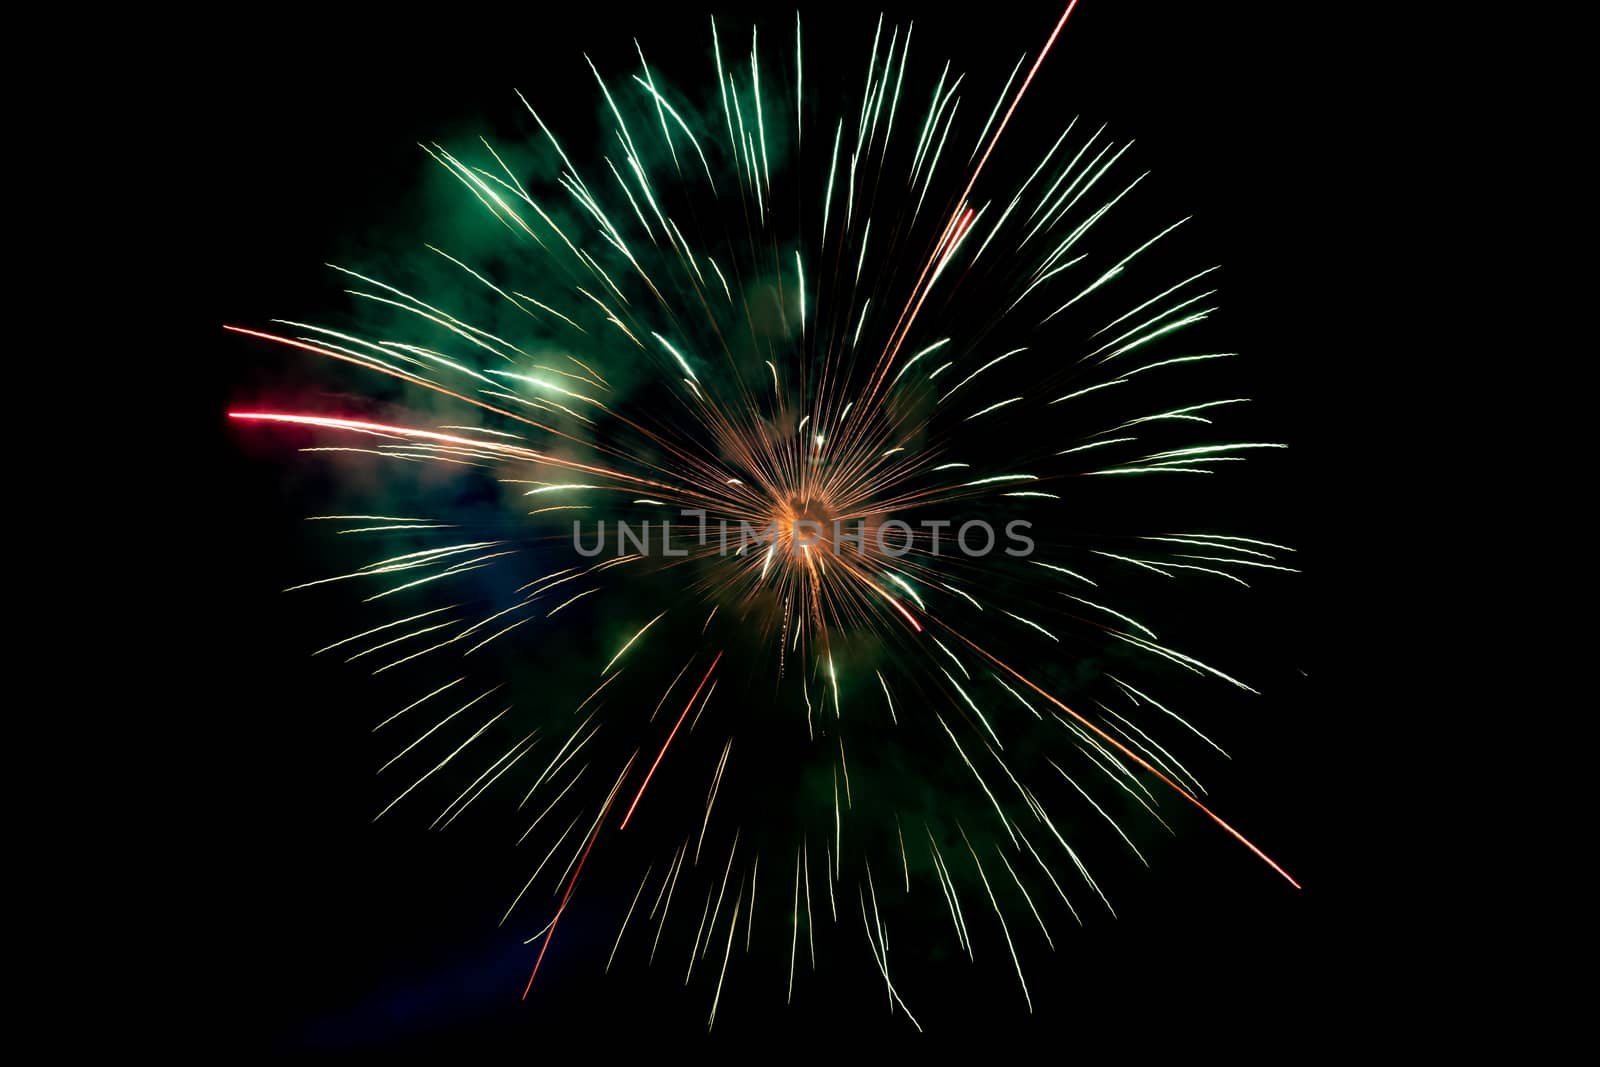 Center Green Orange Sparkling Fireworks Background on Night Scen by steafpong